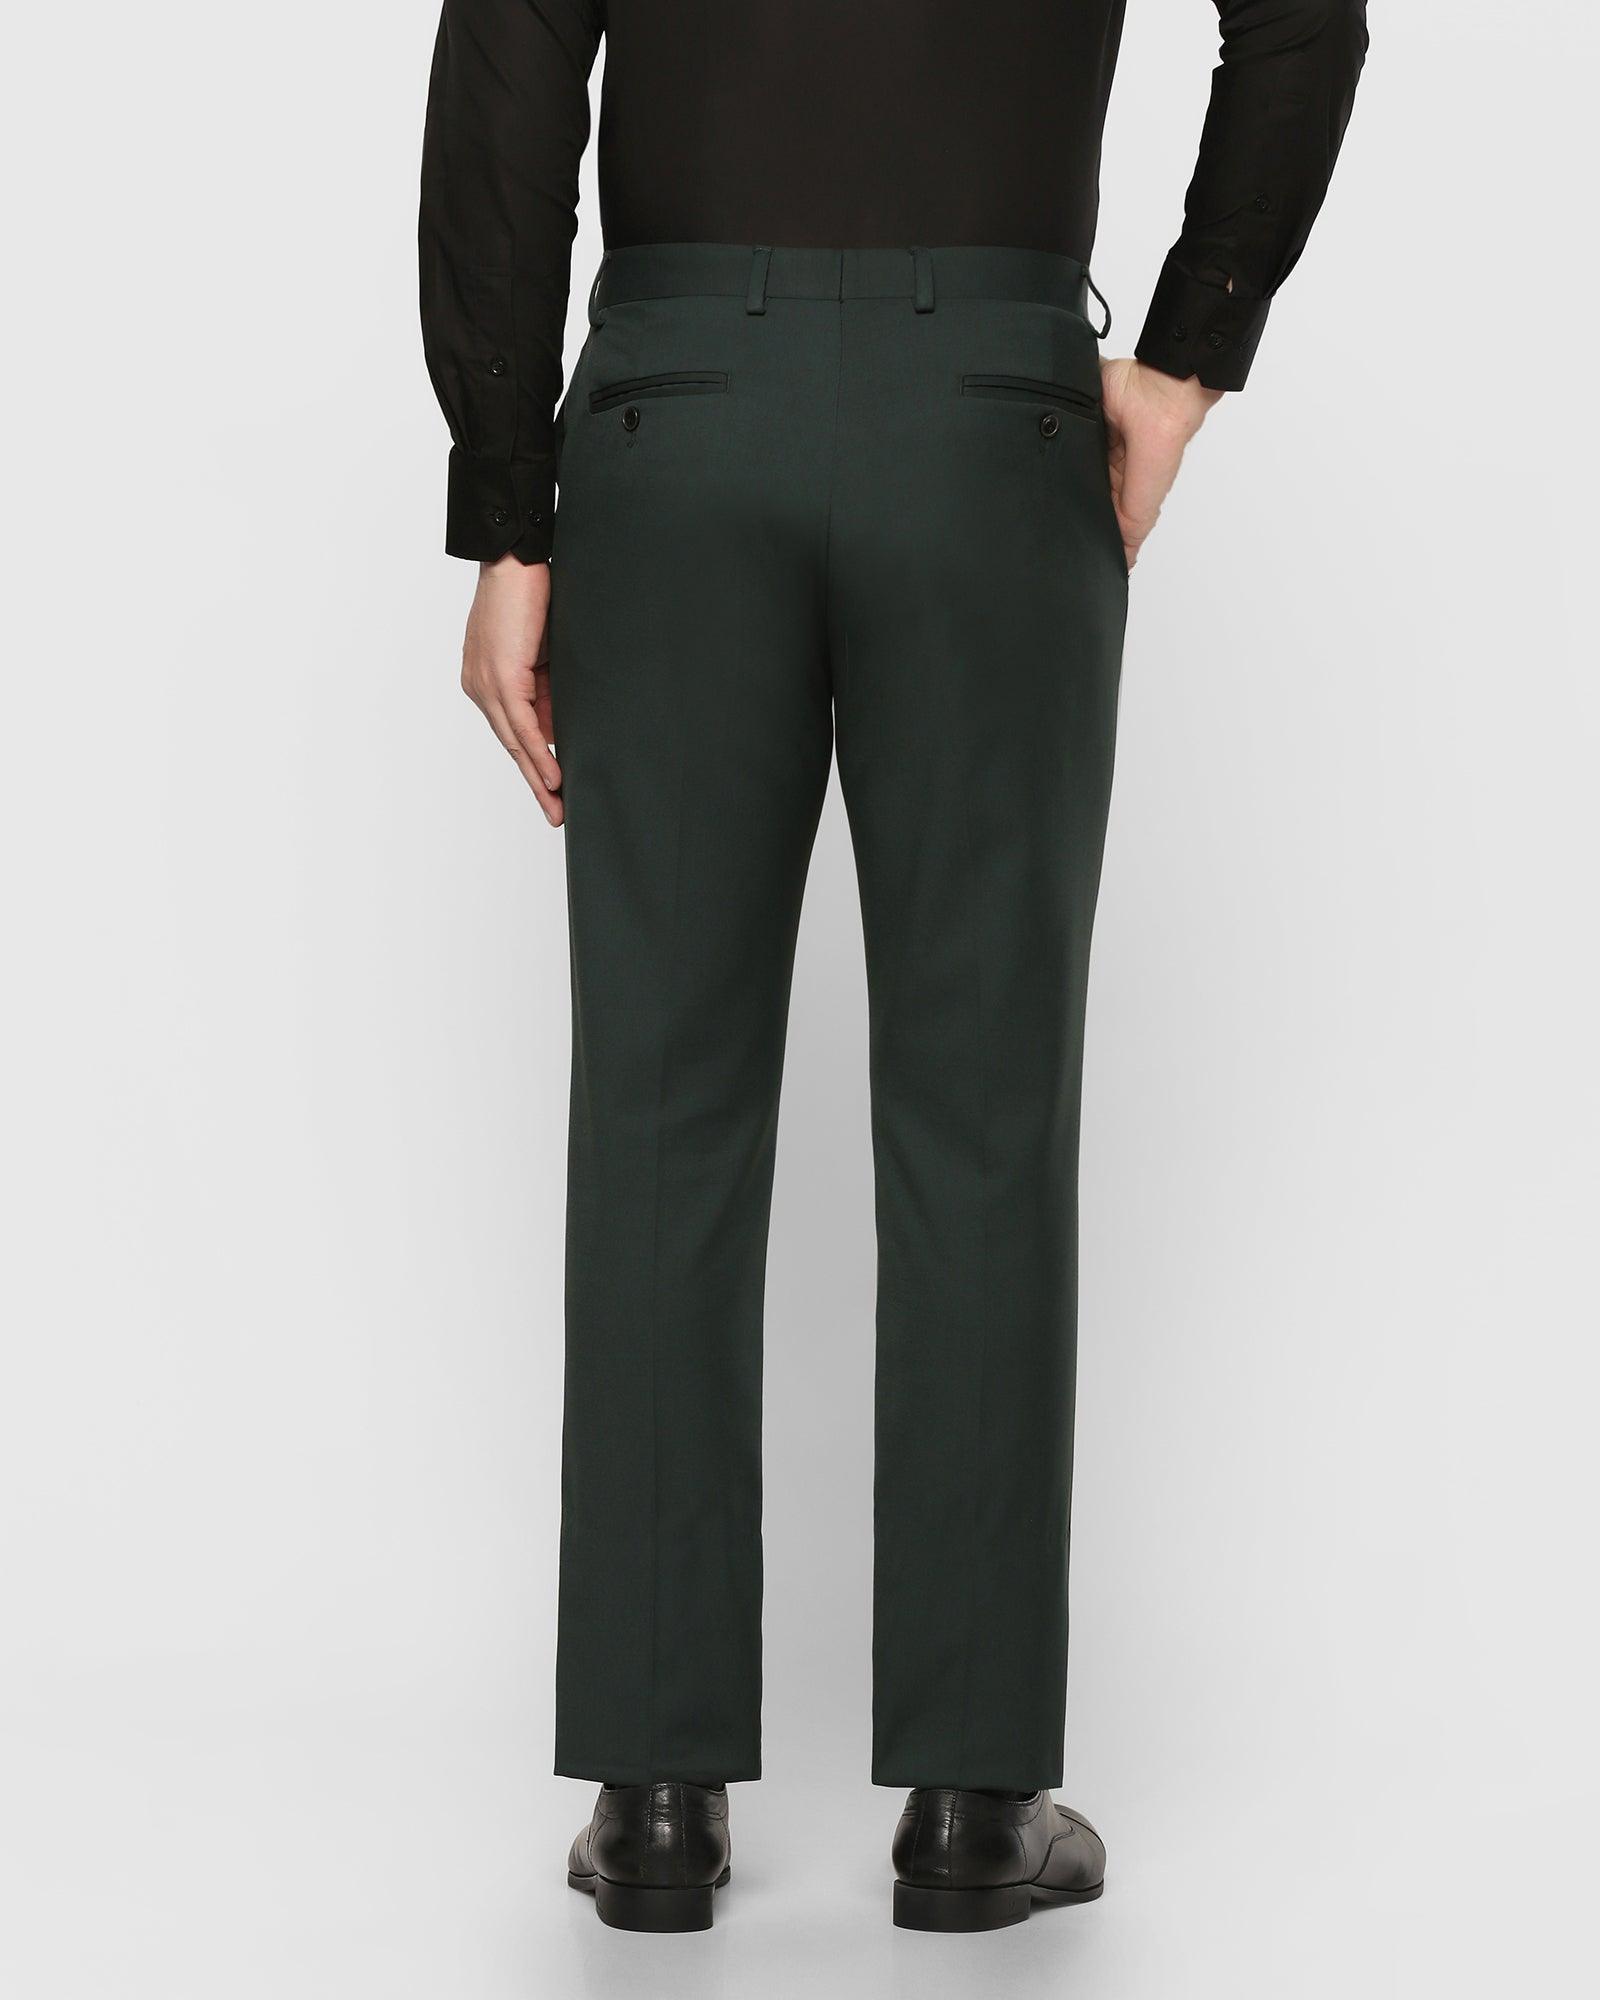 Cotton Dark Green Colour Mens Lycra Slim Trouser Formal Wear